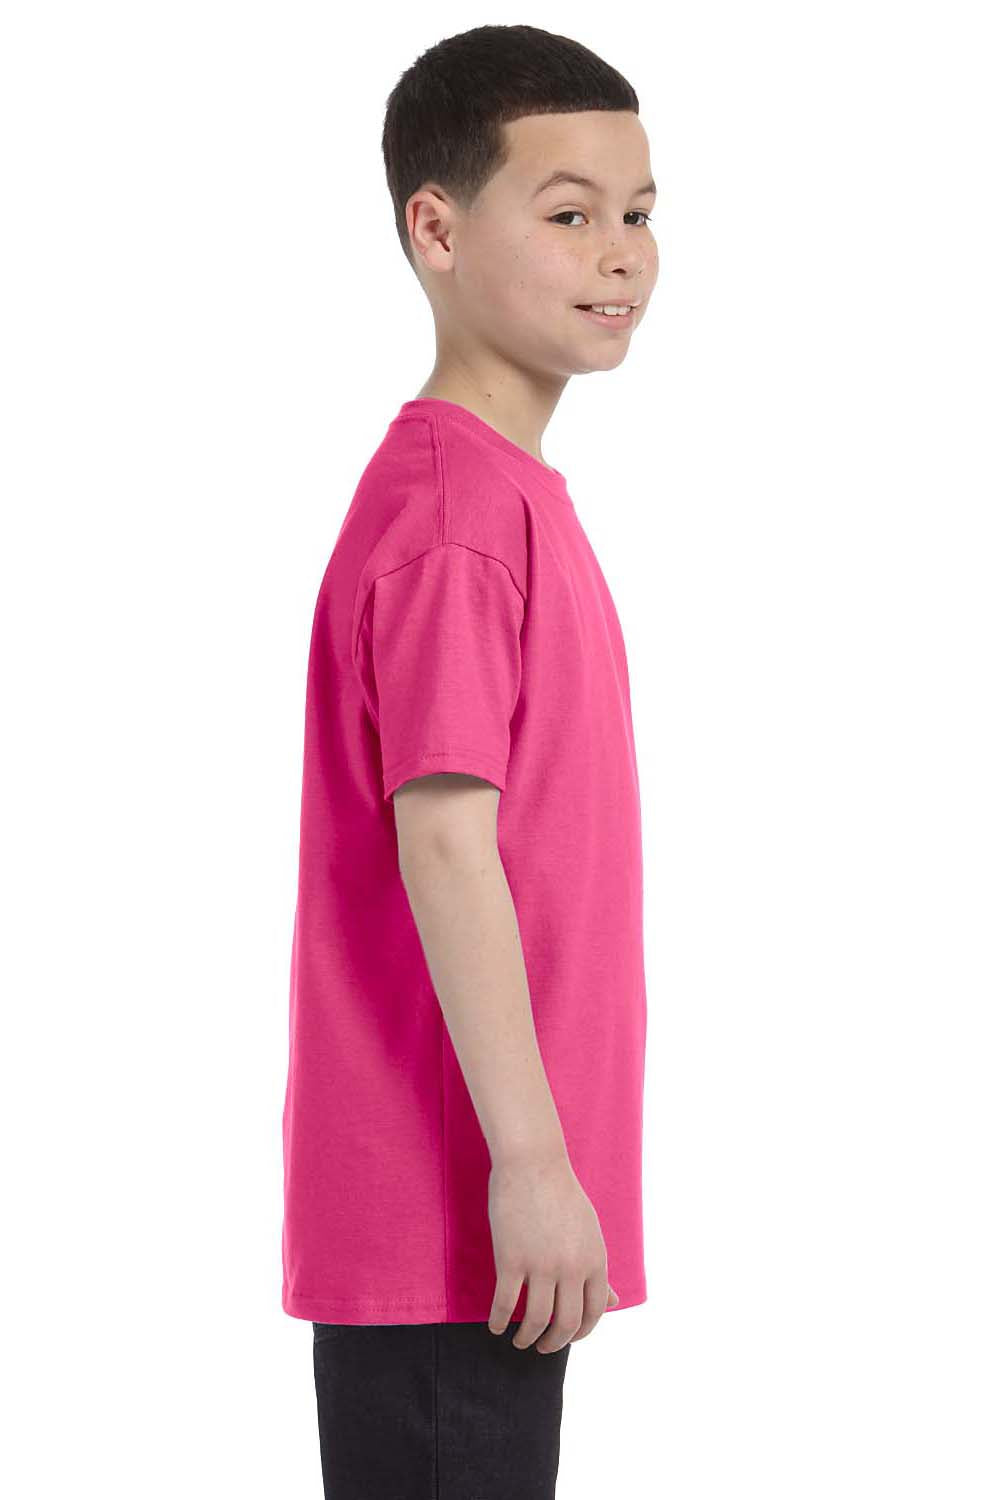 Hanes 54500 Youth ComfortSoft Short Sleeve Crewneck T-Shirt Wow Pink Side